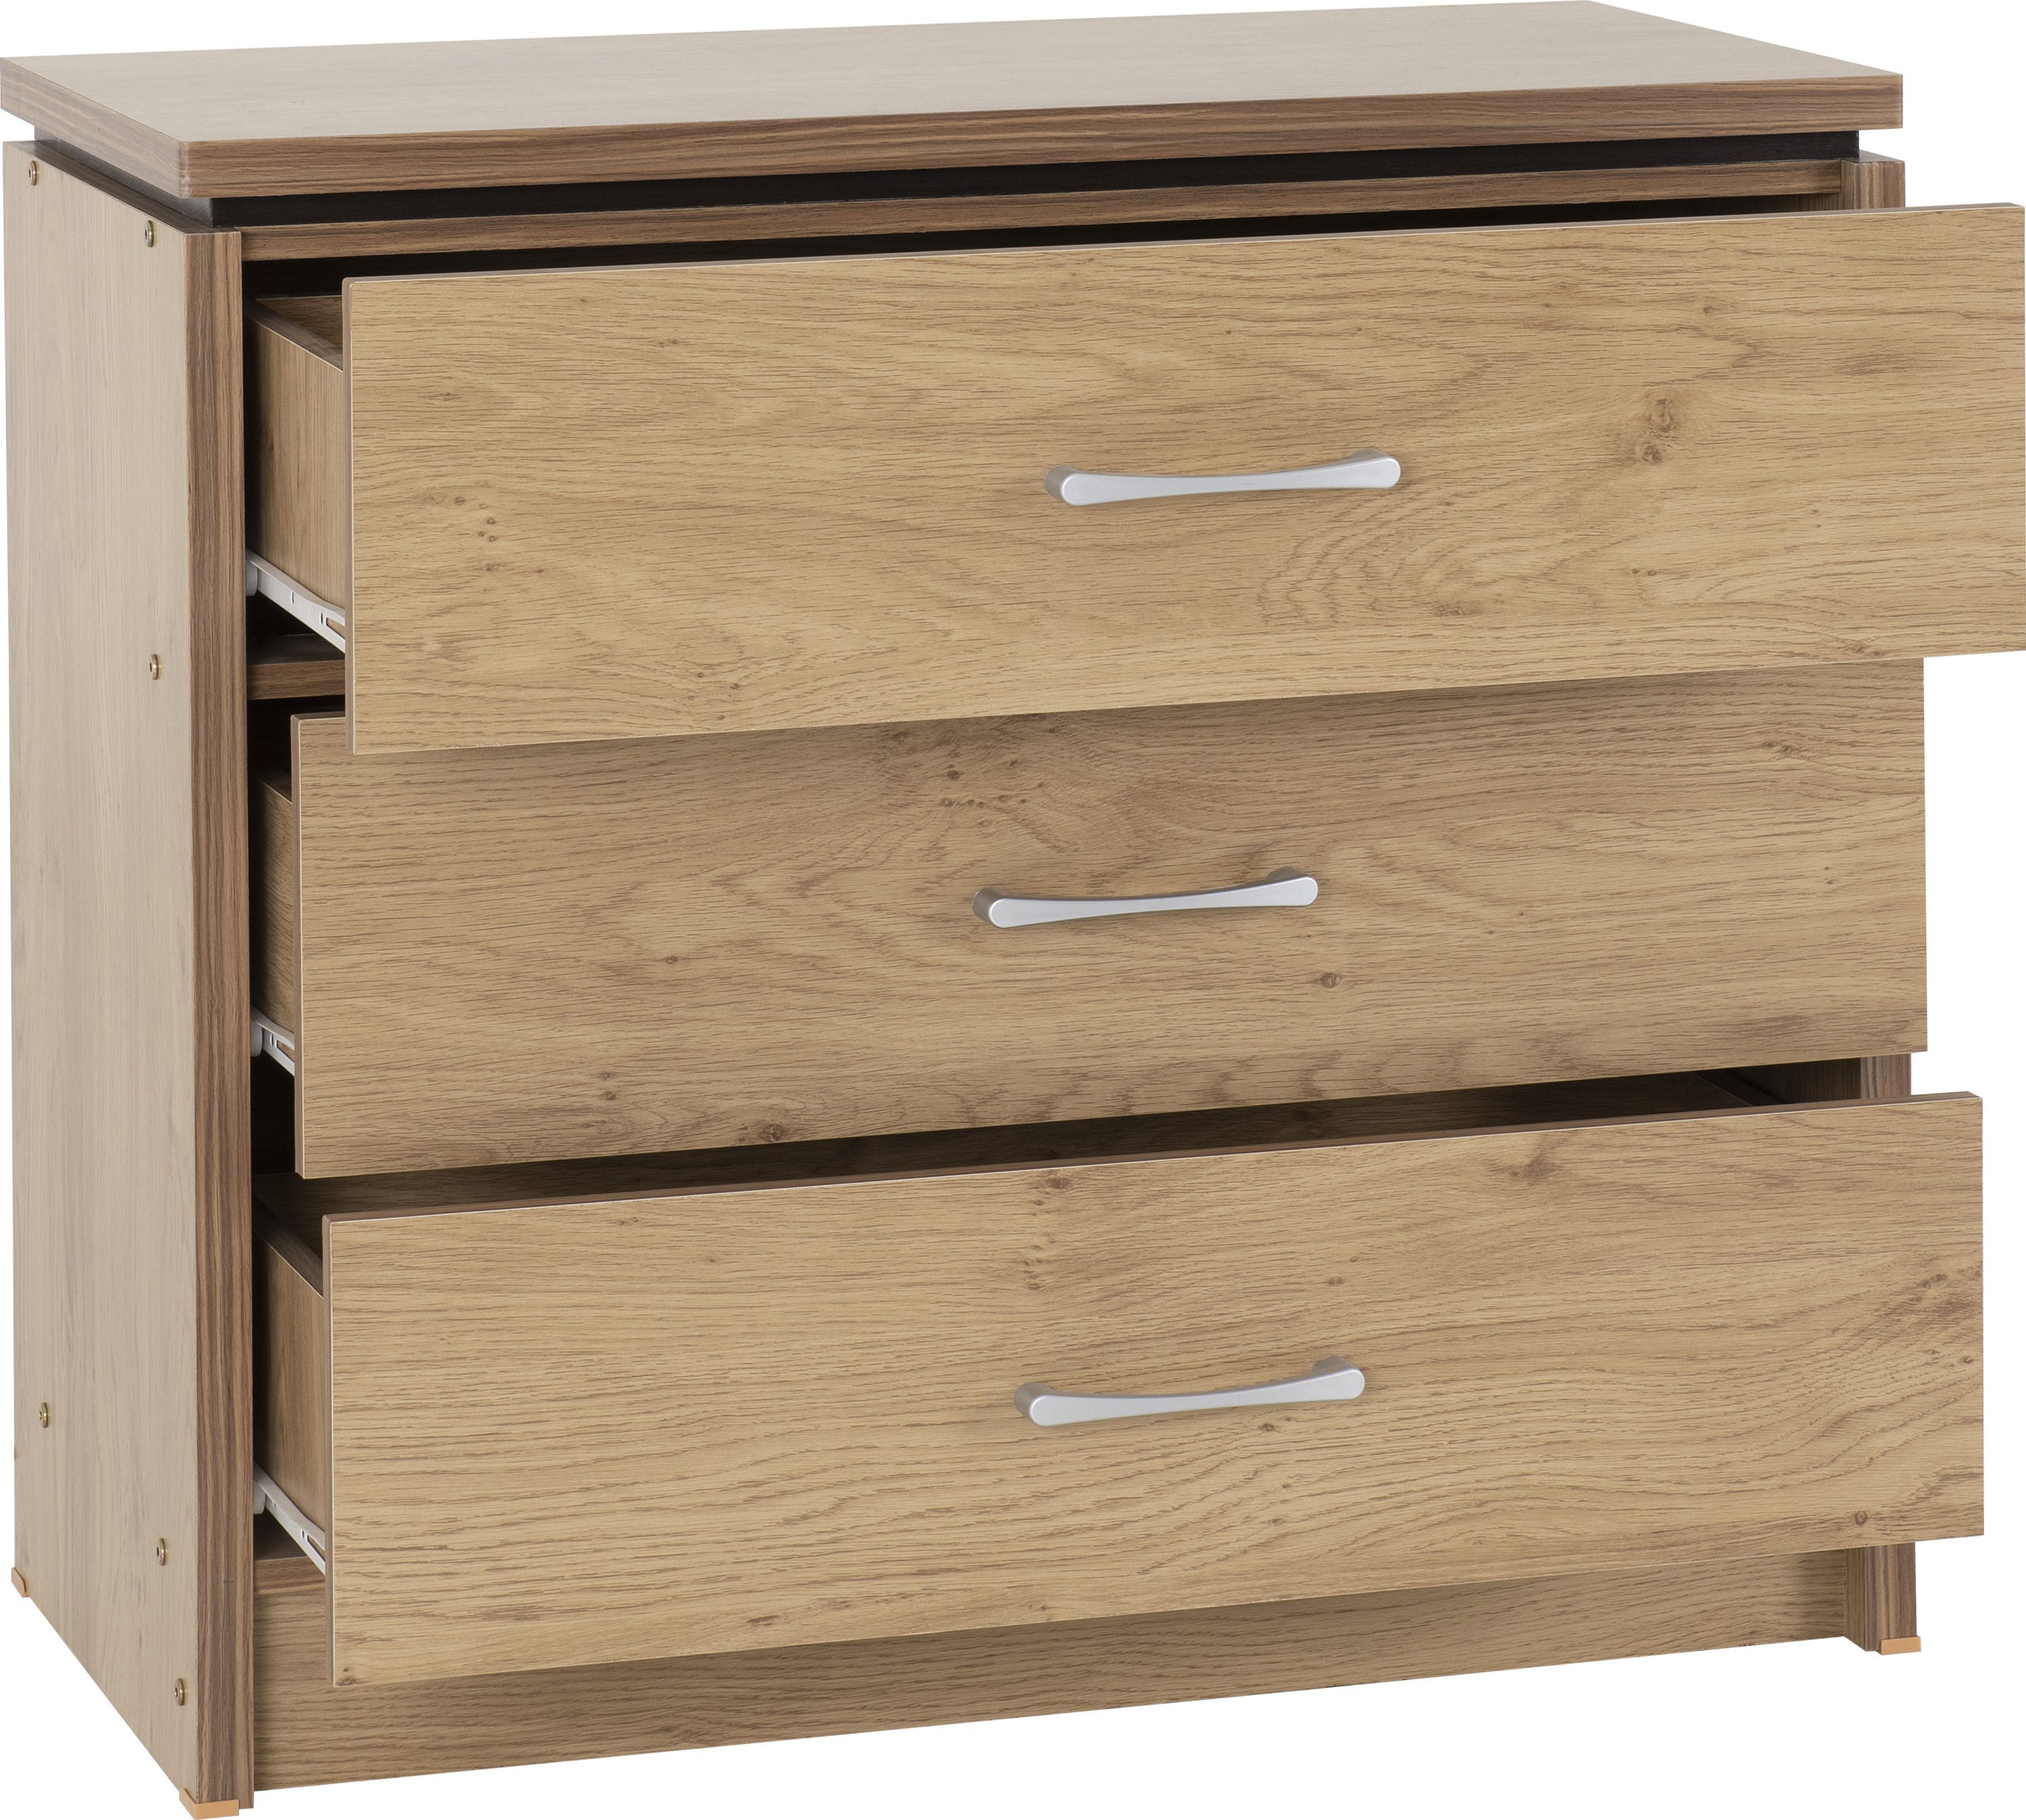 3 drawer chest oak effect